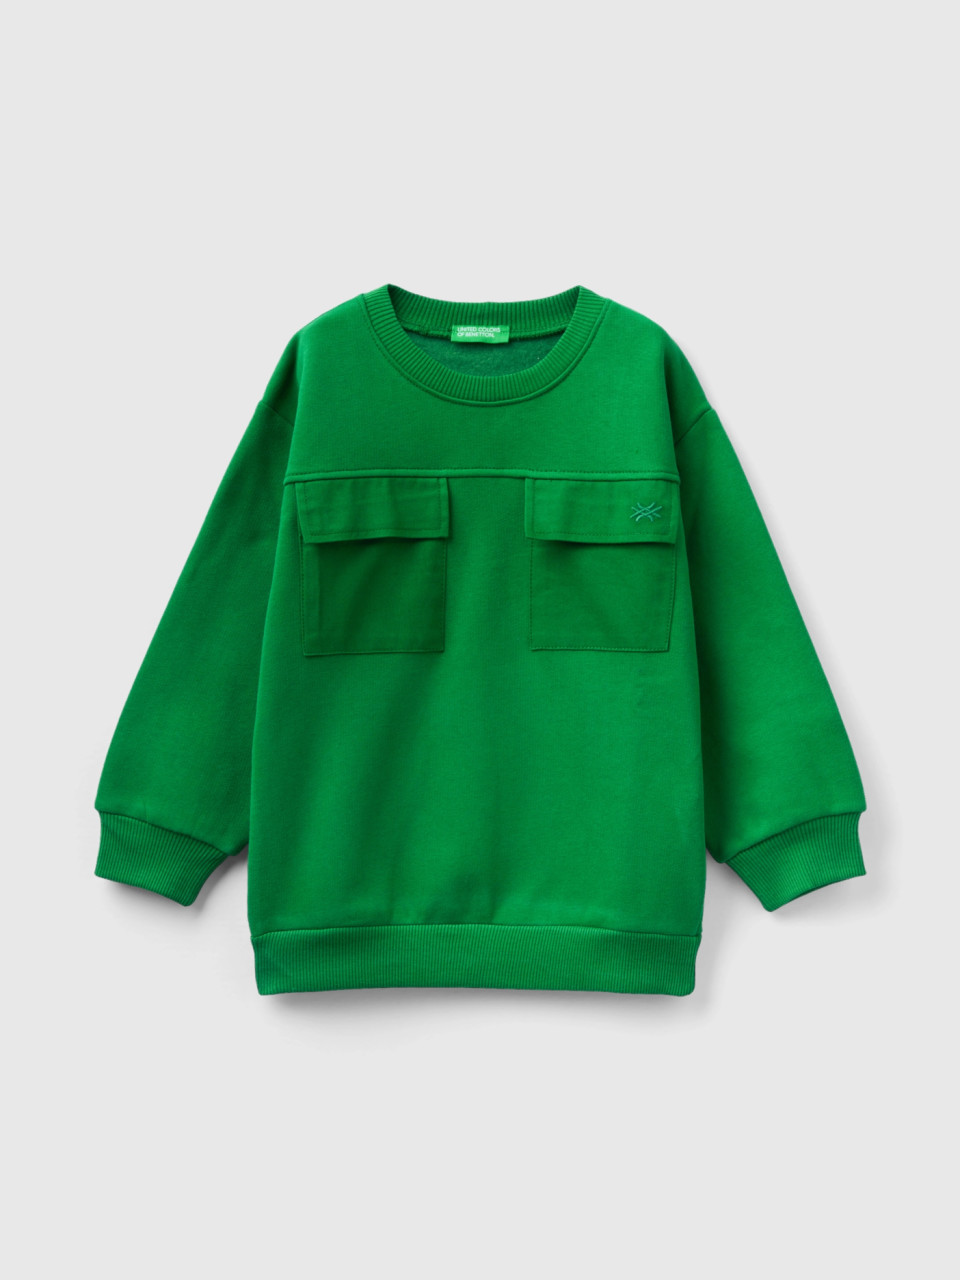 Benetton, Warm Sweatshirt With Pockets, Green, Kids